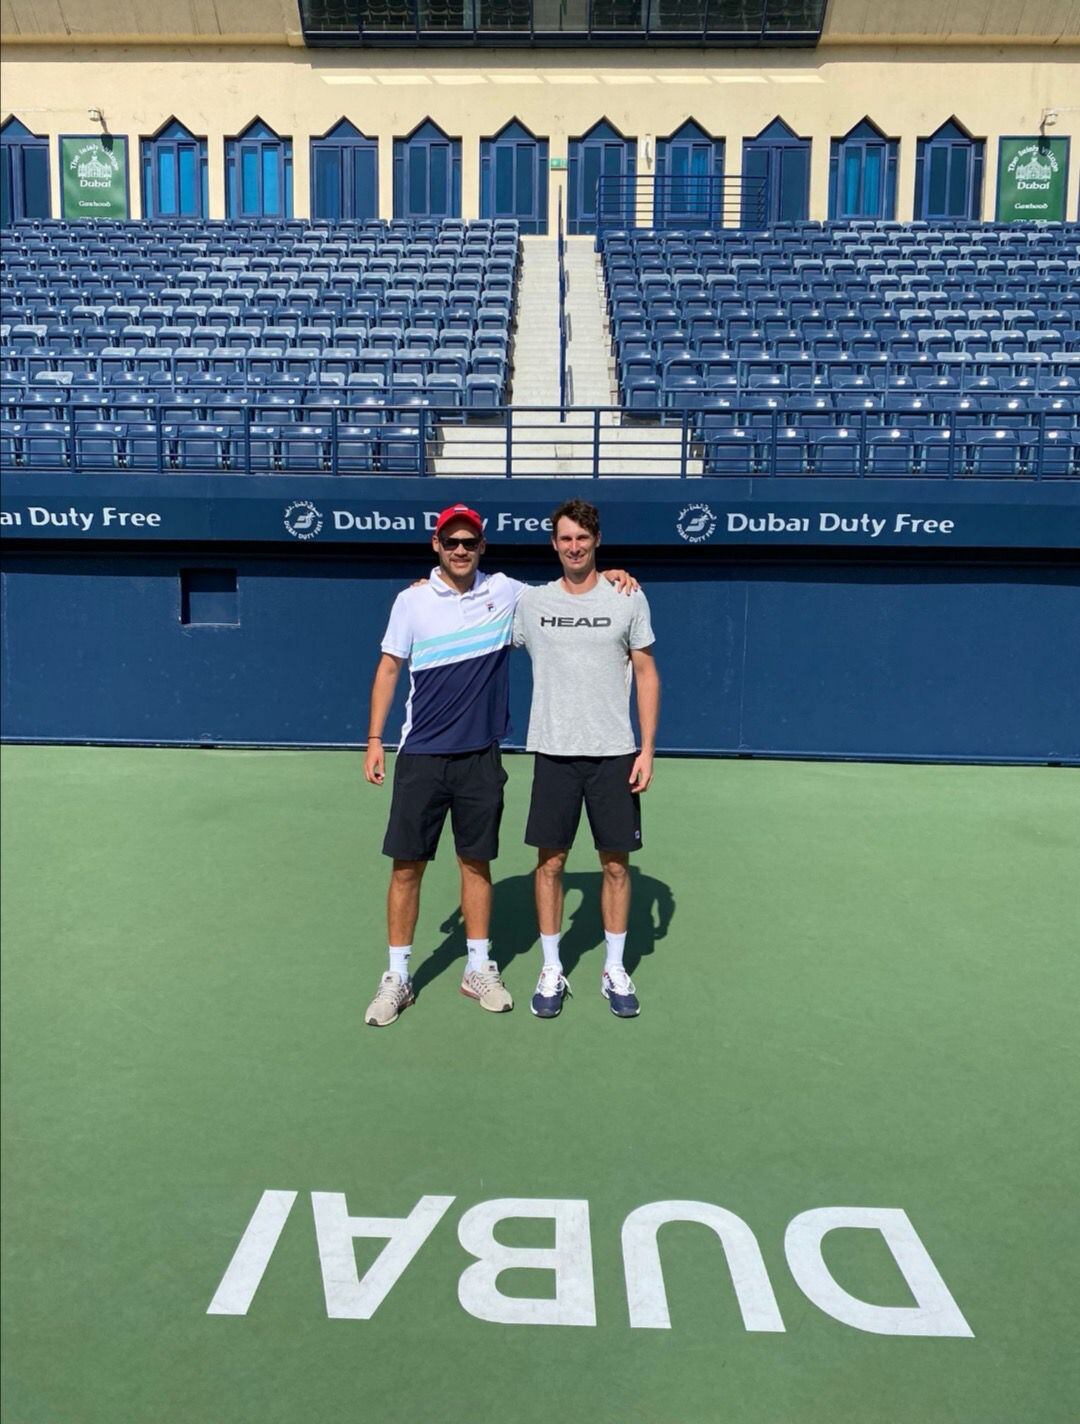 PBI Tennis Court Dubai - Premier Tennis Coaching